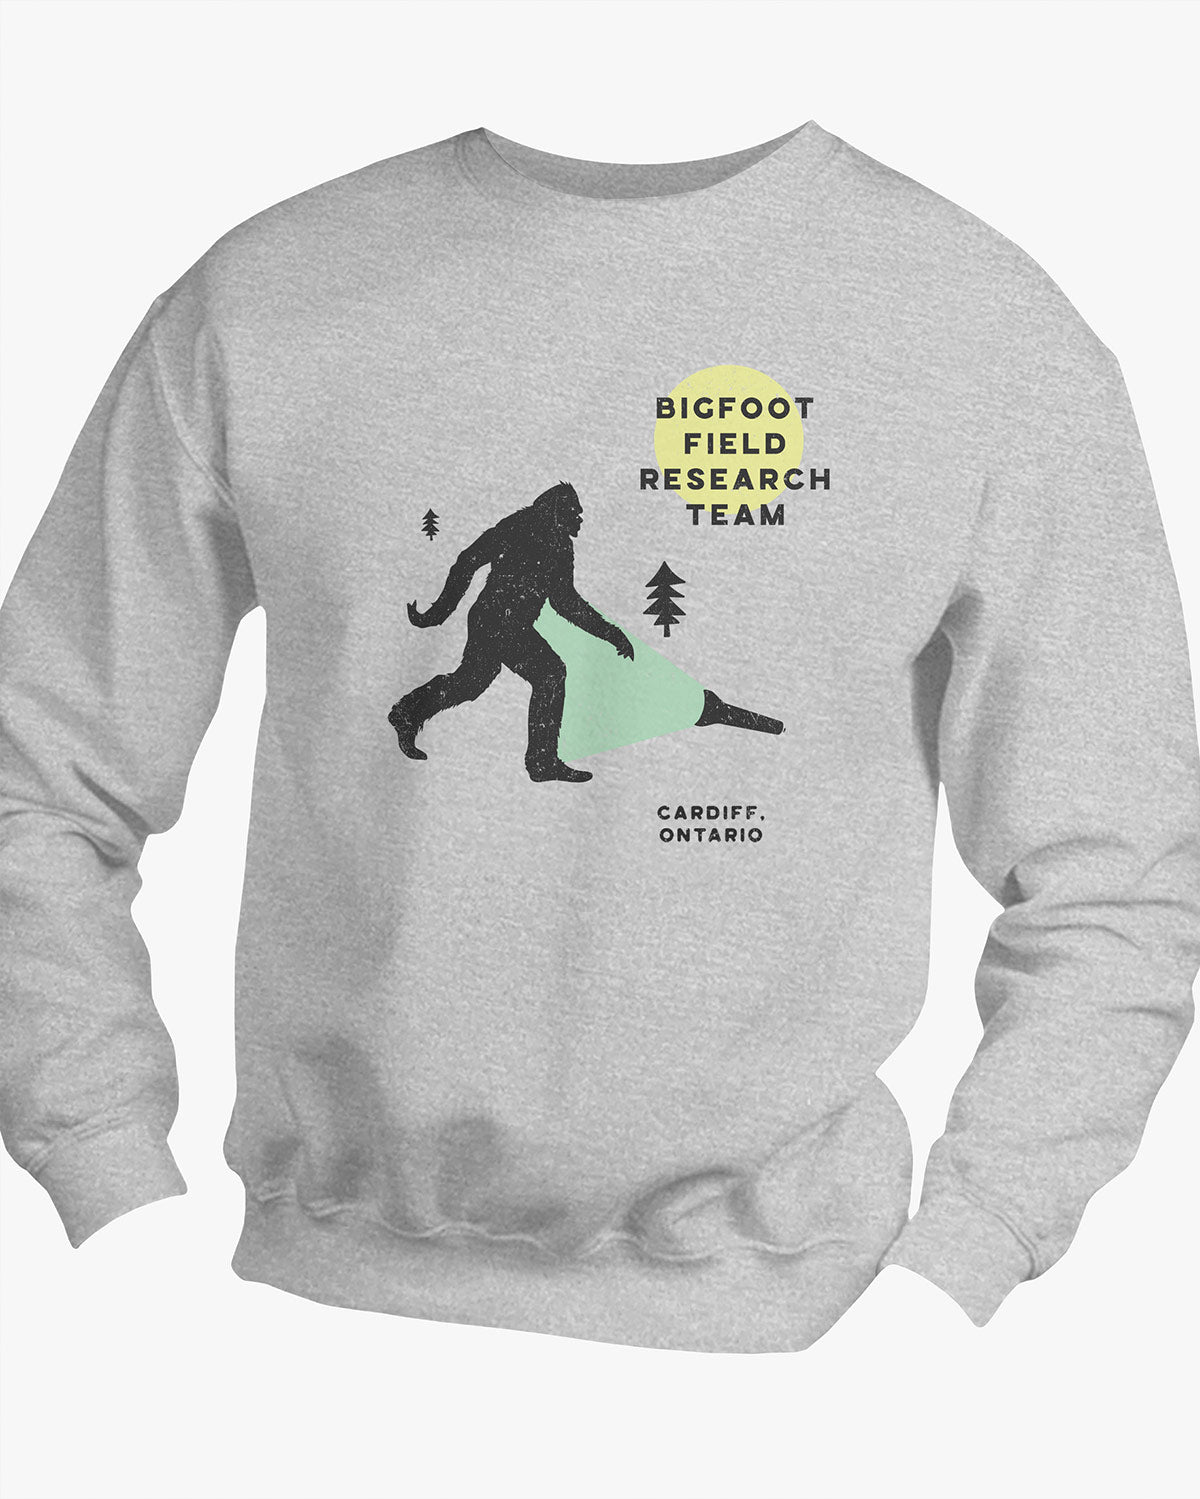 Bigfoot Research Team - Cardiff - Sweater